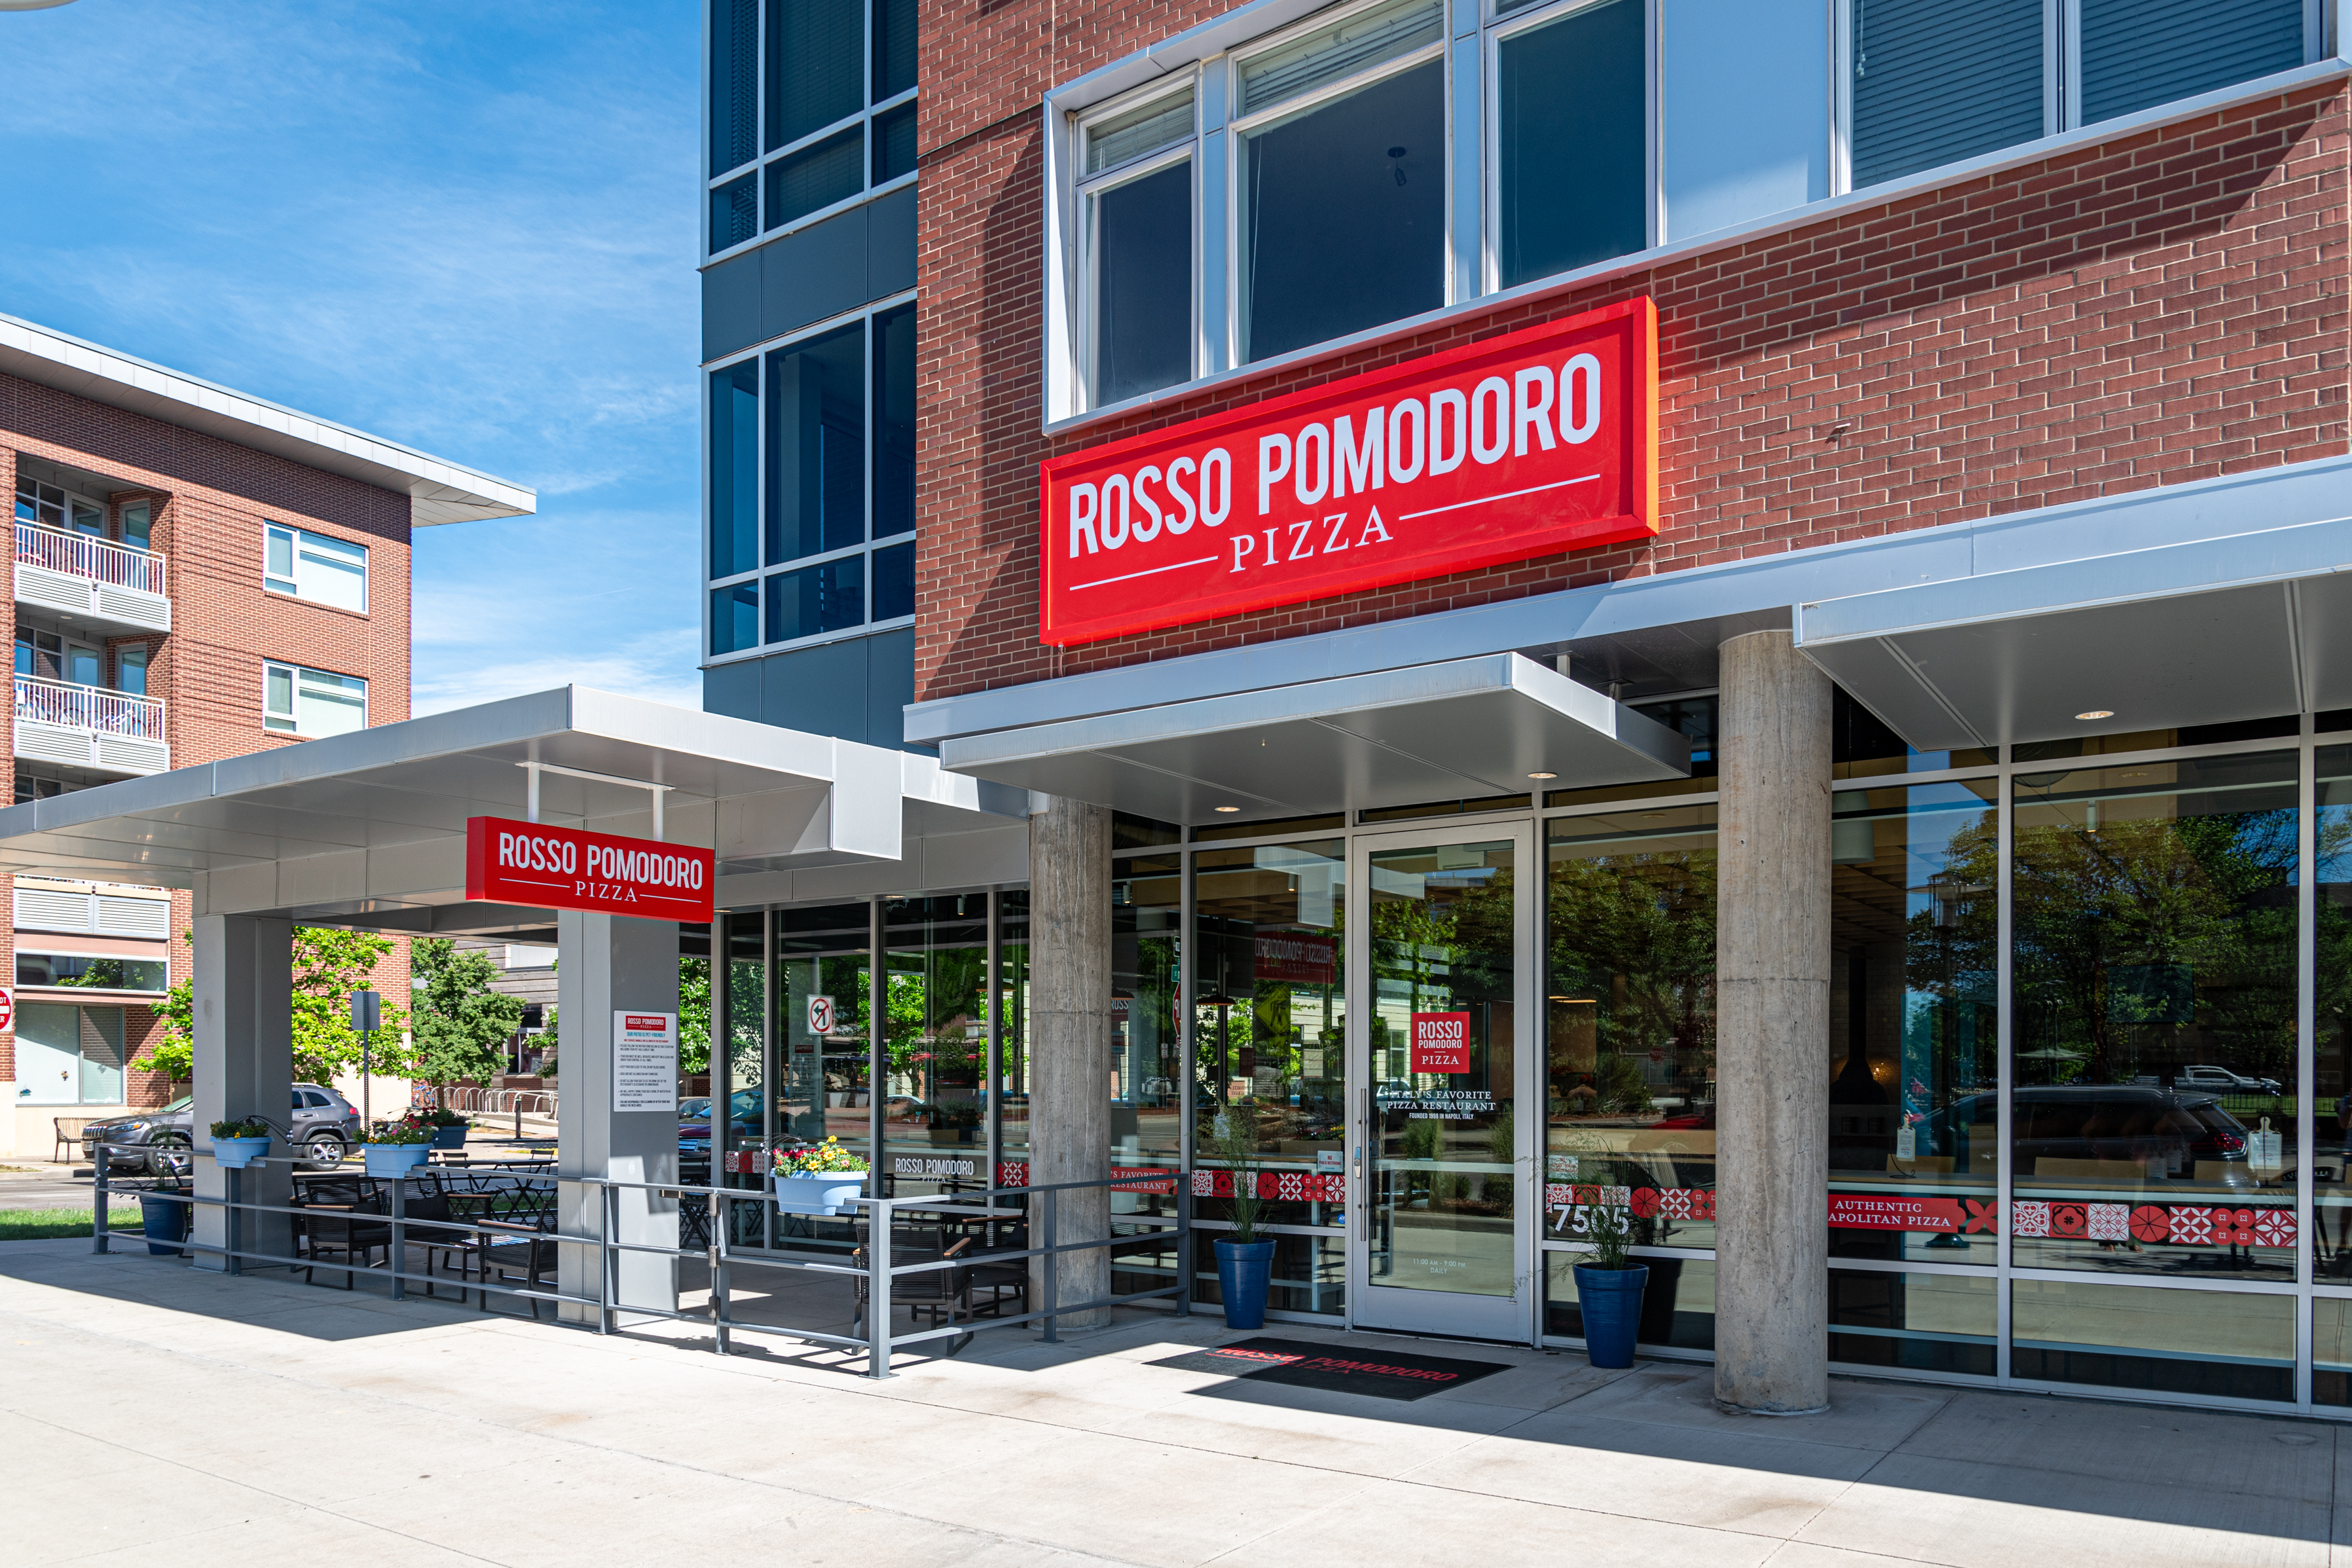 Image shows the exterior of the new Rosso Pomodoro Neapolitan Pizza Restaurant in Denver Colorado